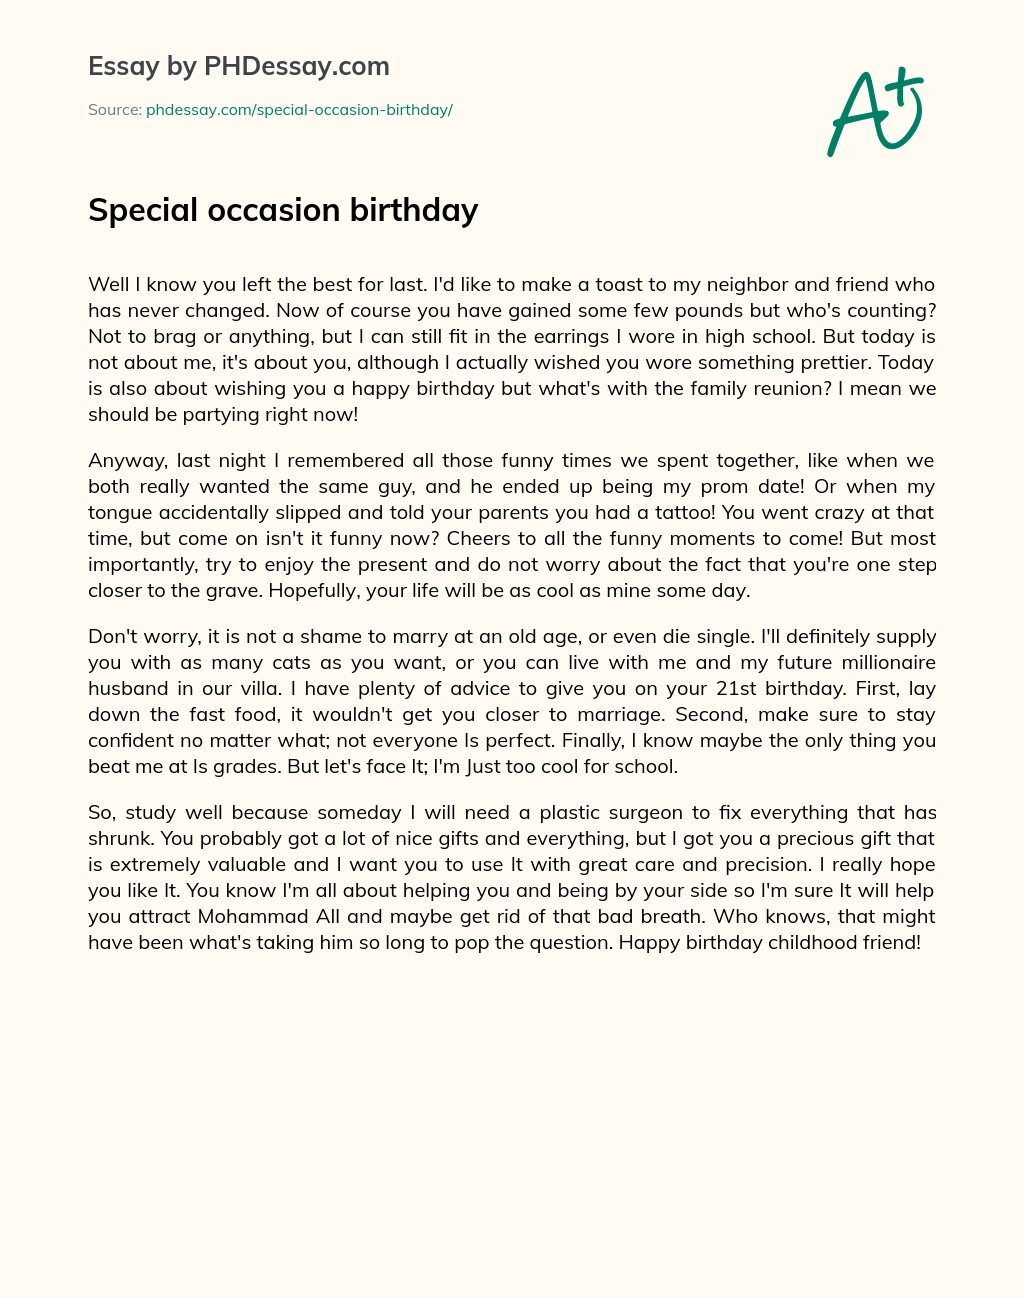 Special occasion birthday essay